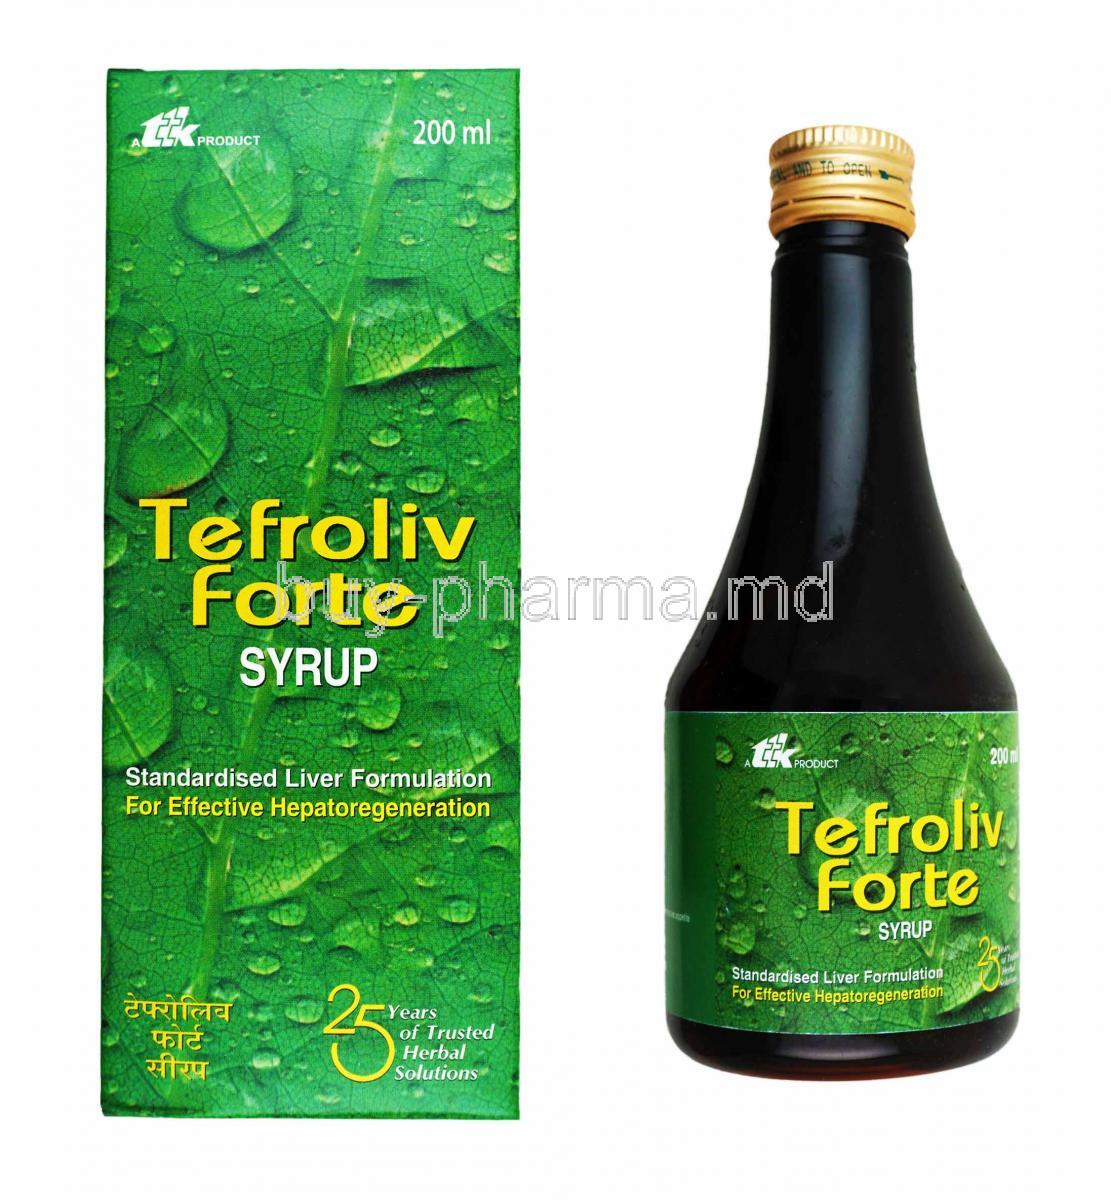 Tefroliv Forte Syrup box and bottle